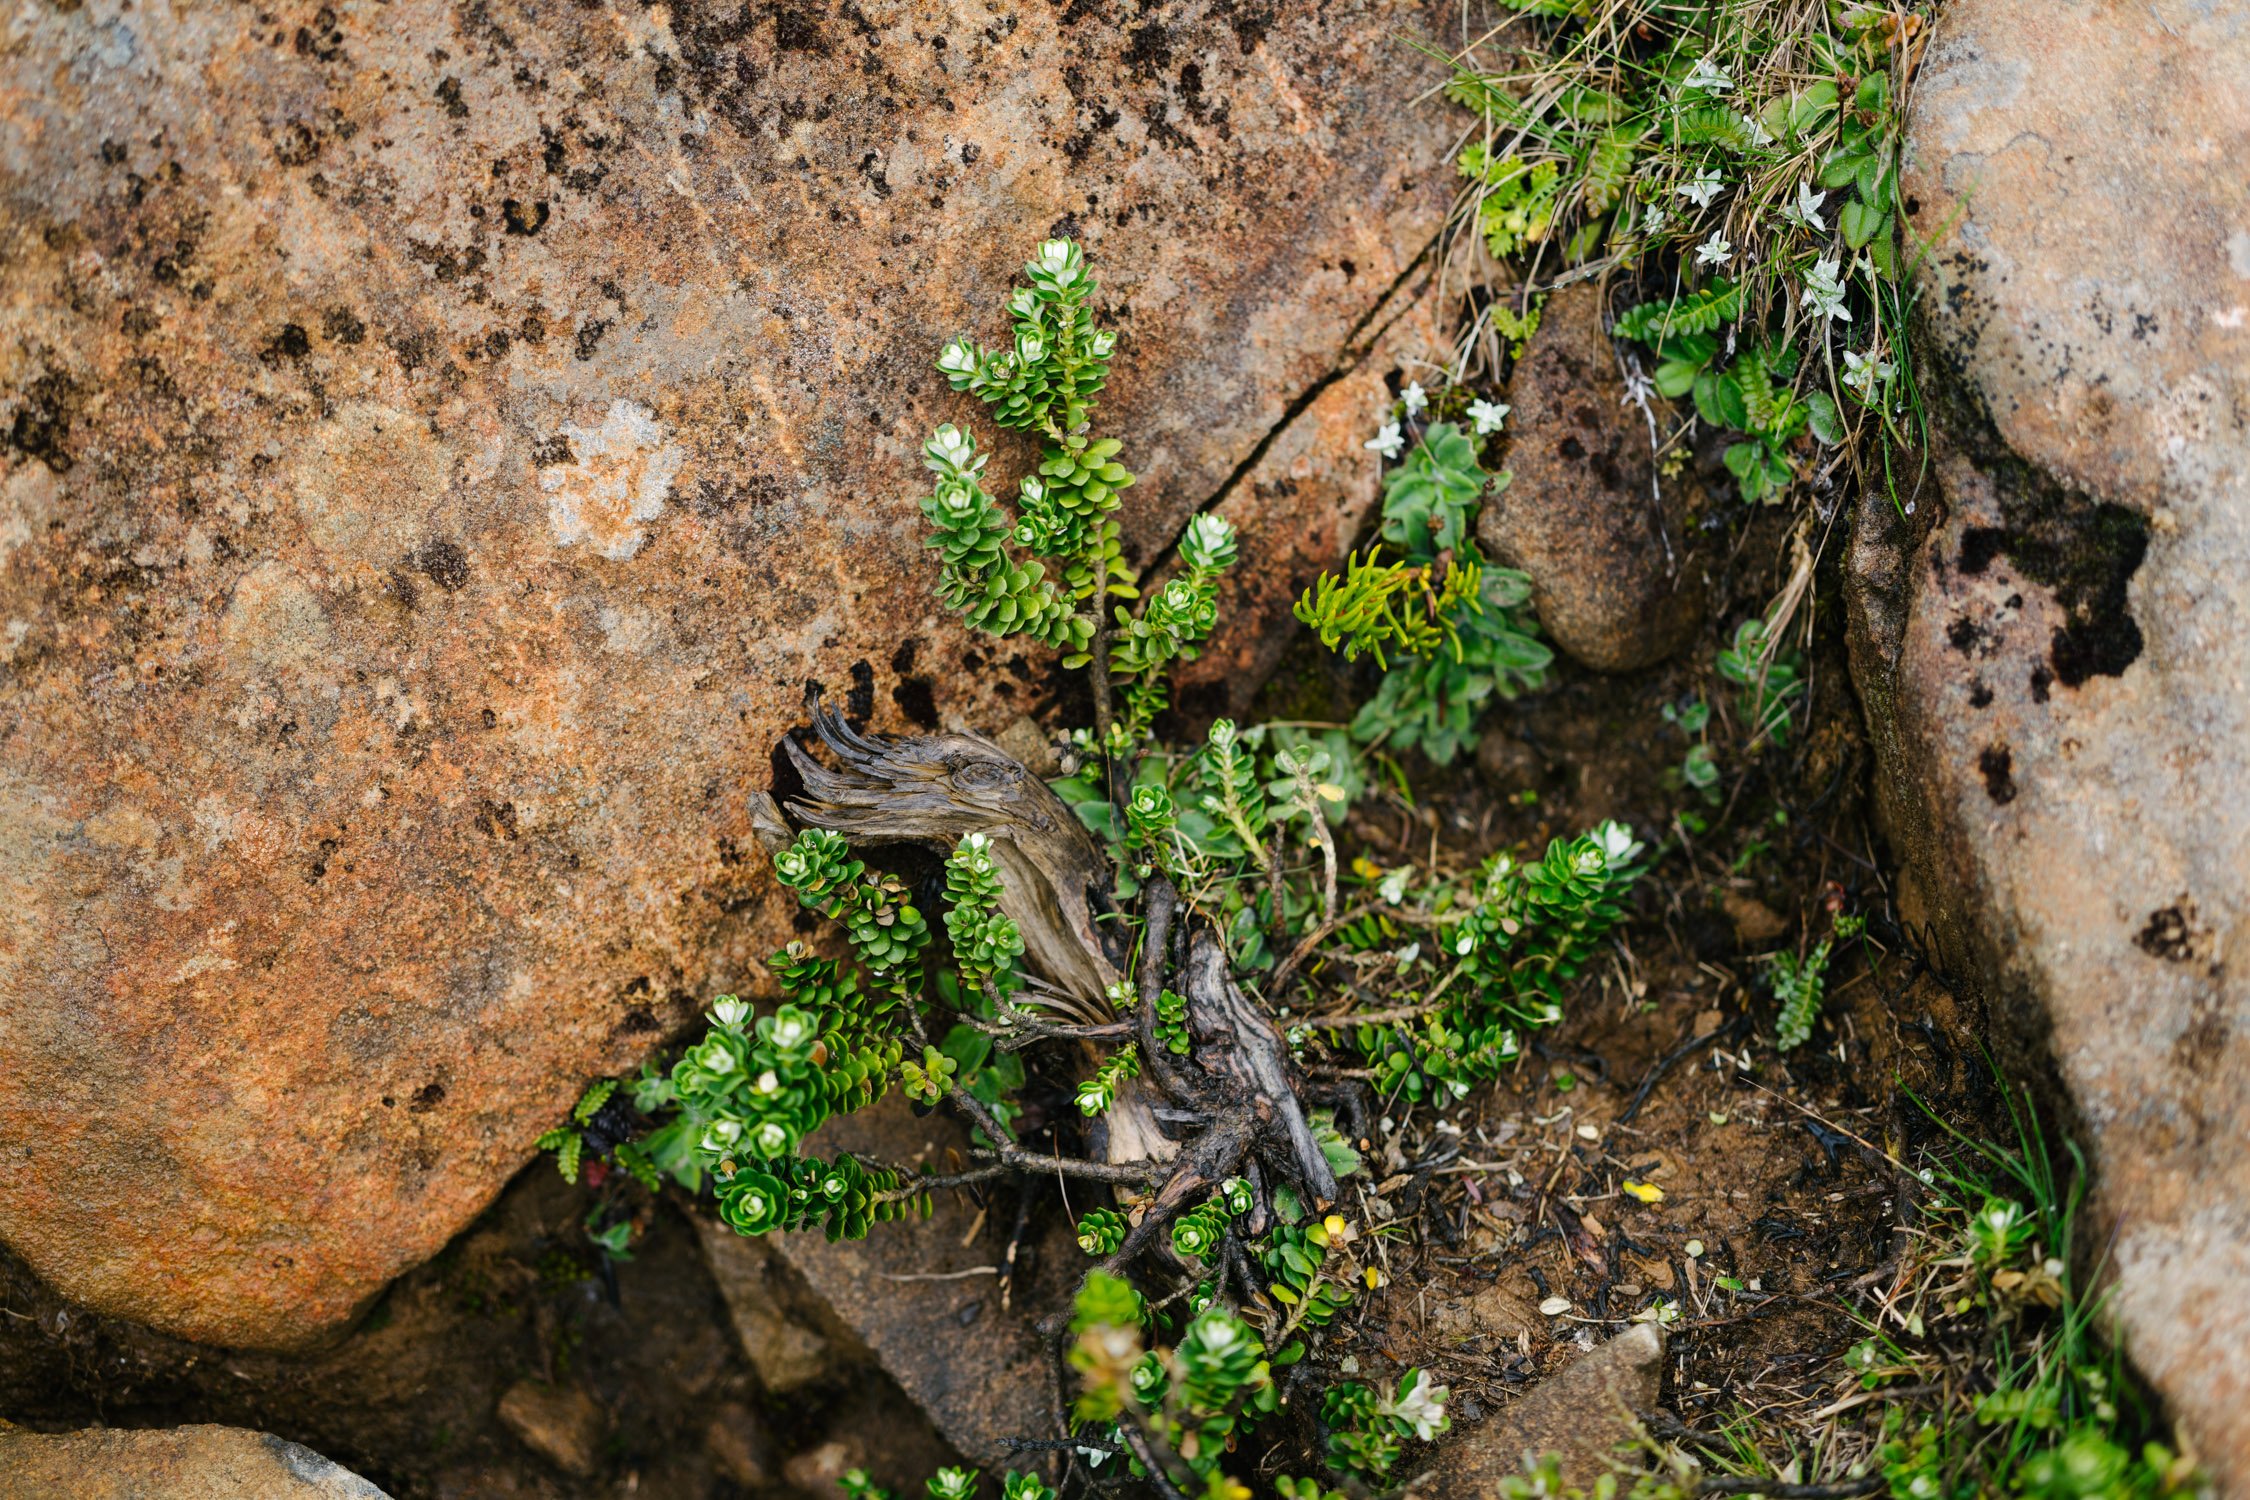 Pimelea plants amongst the rocks